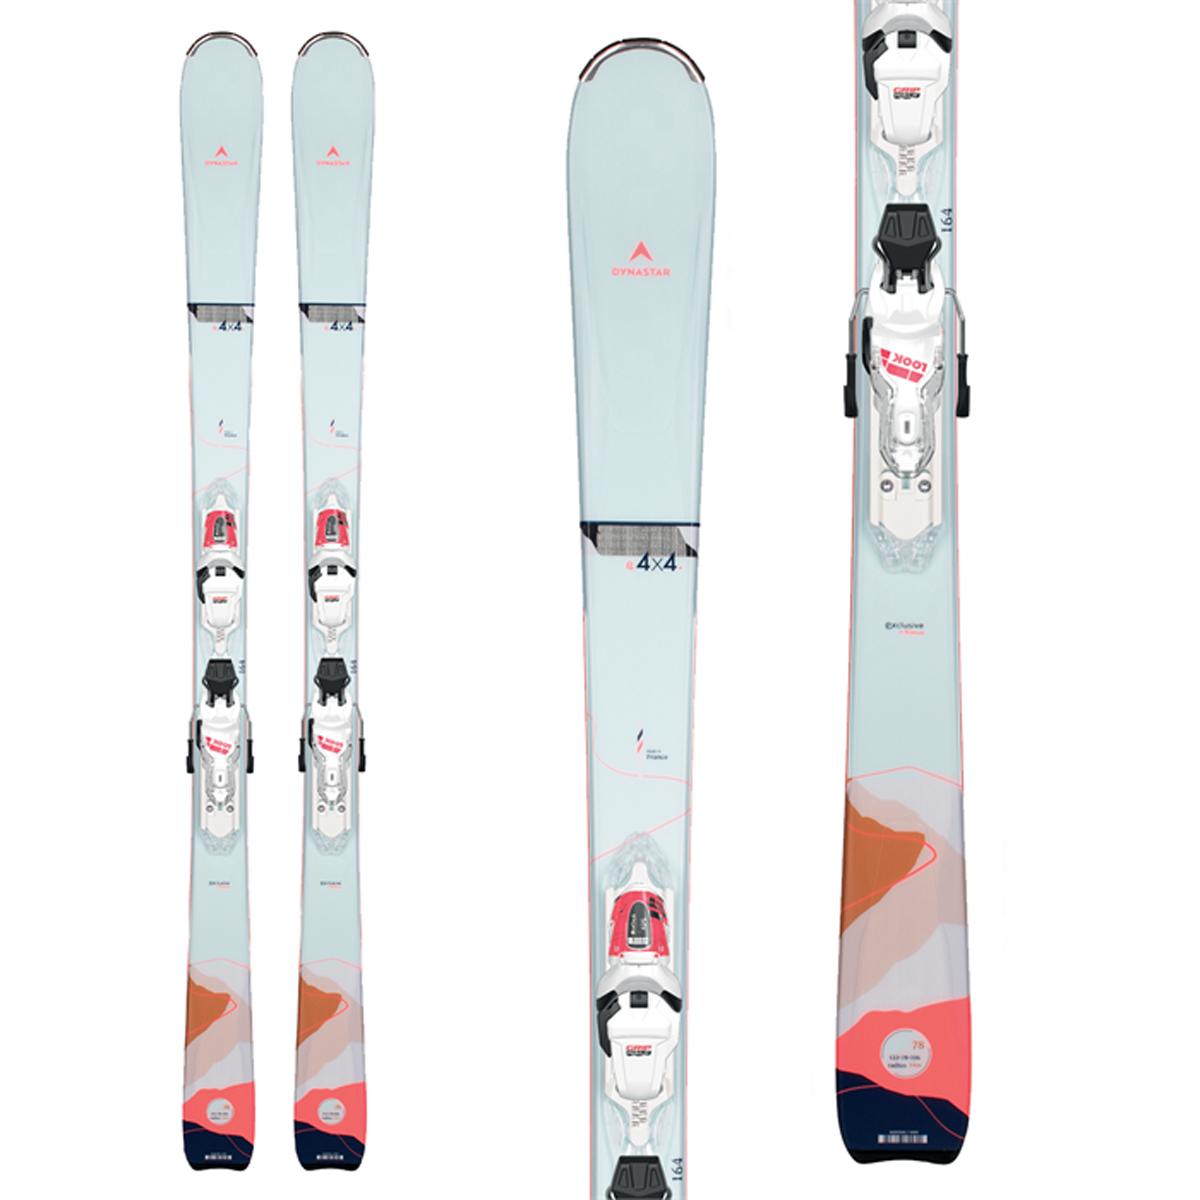 Dynastar E 4X4 3 (XPRESS) System Skis 158cm Women's w/ Look Xpress W 11 GW B83 System Binding White/Blue 83mm Women's